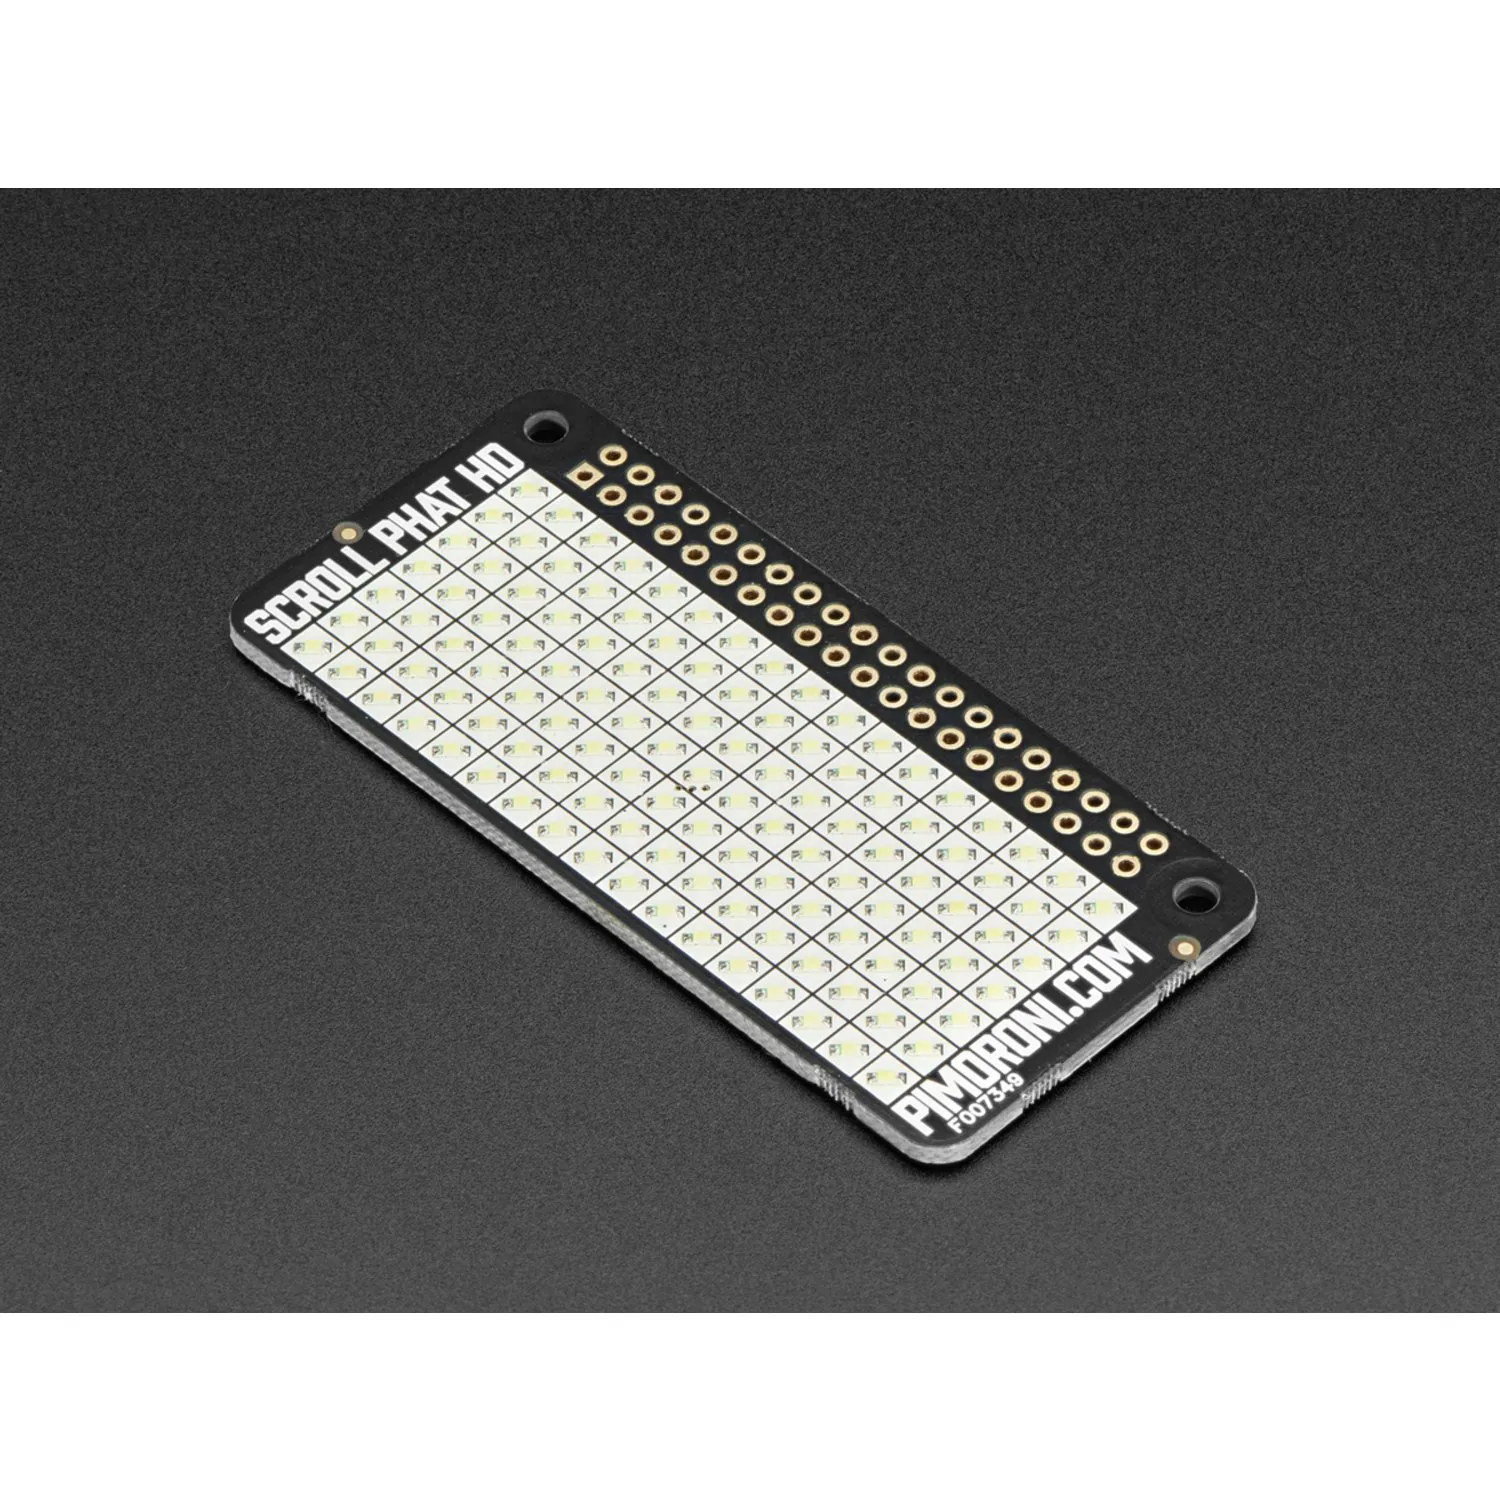 Photo of Pimoroni Scroll pHAT HD – LED Matrix for Raspberry Pi Zero